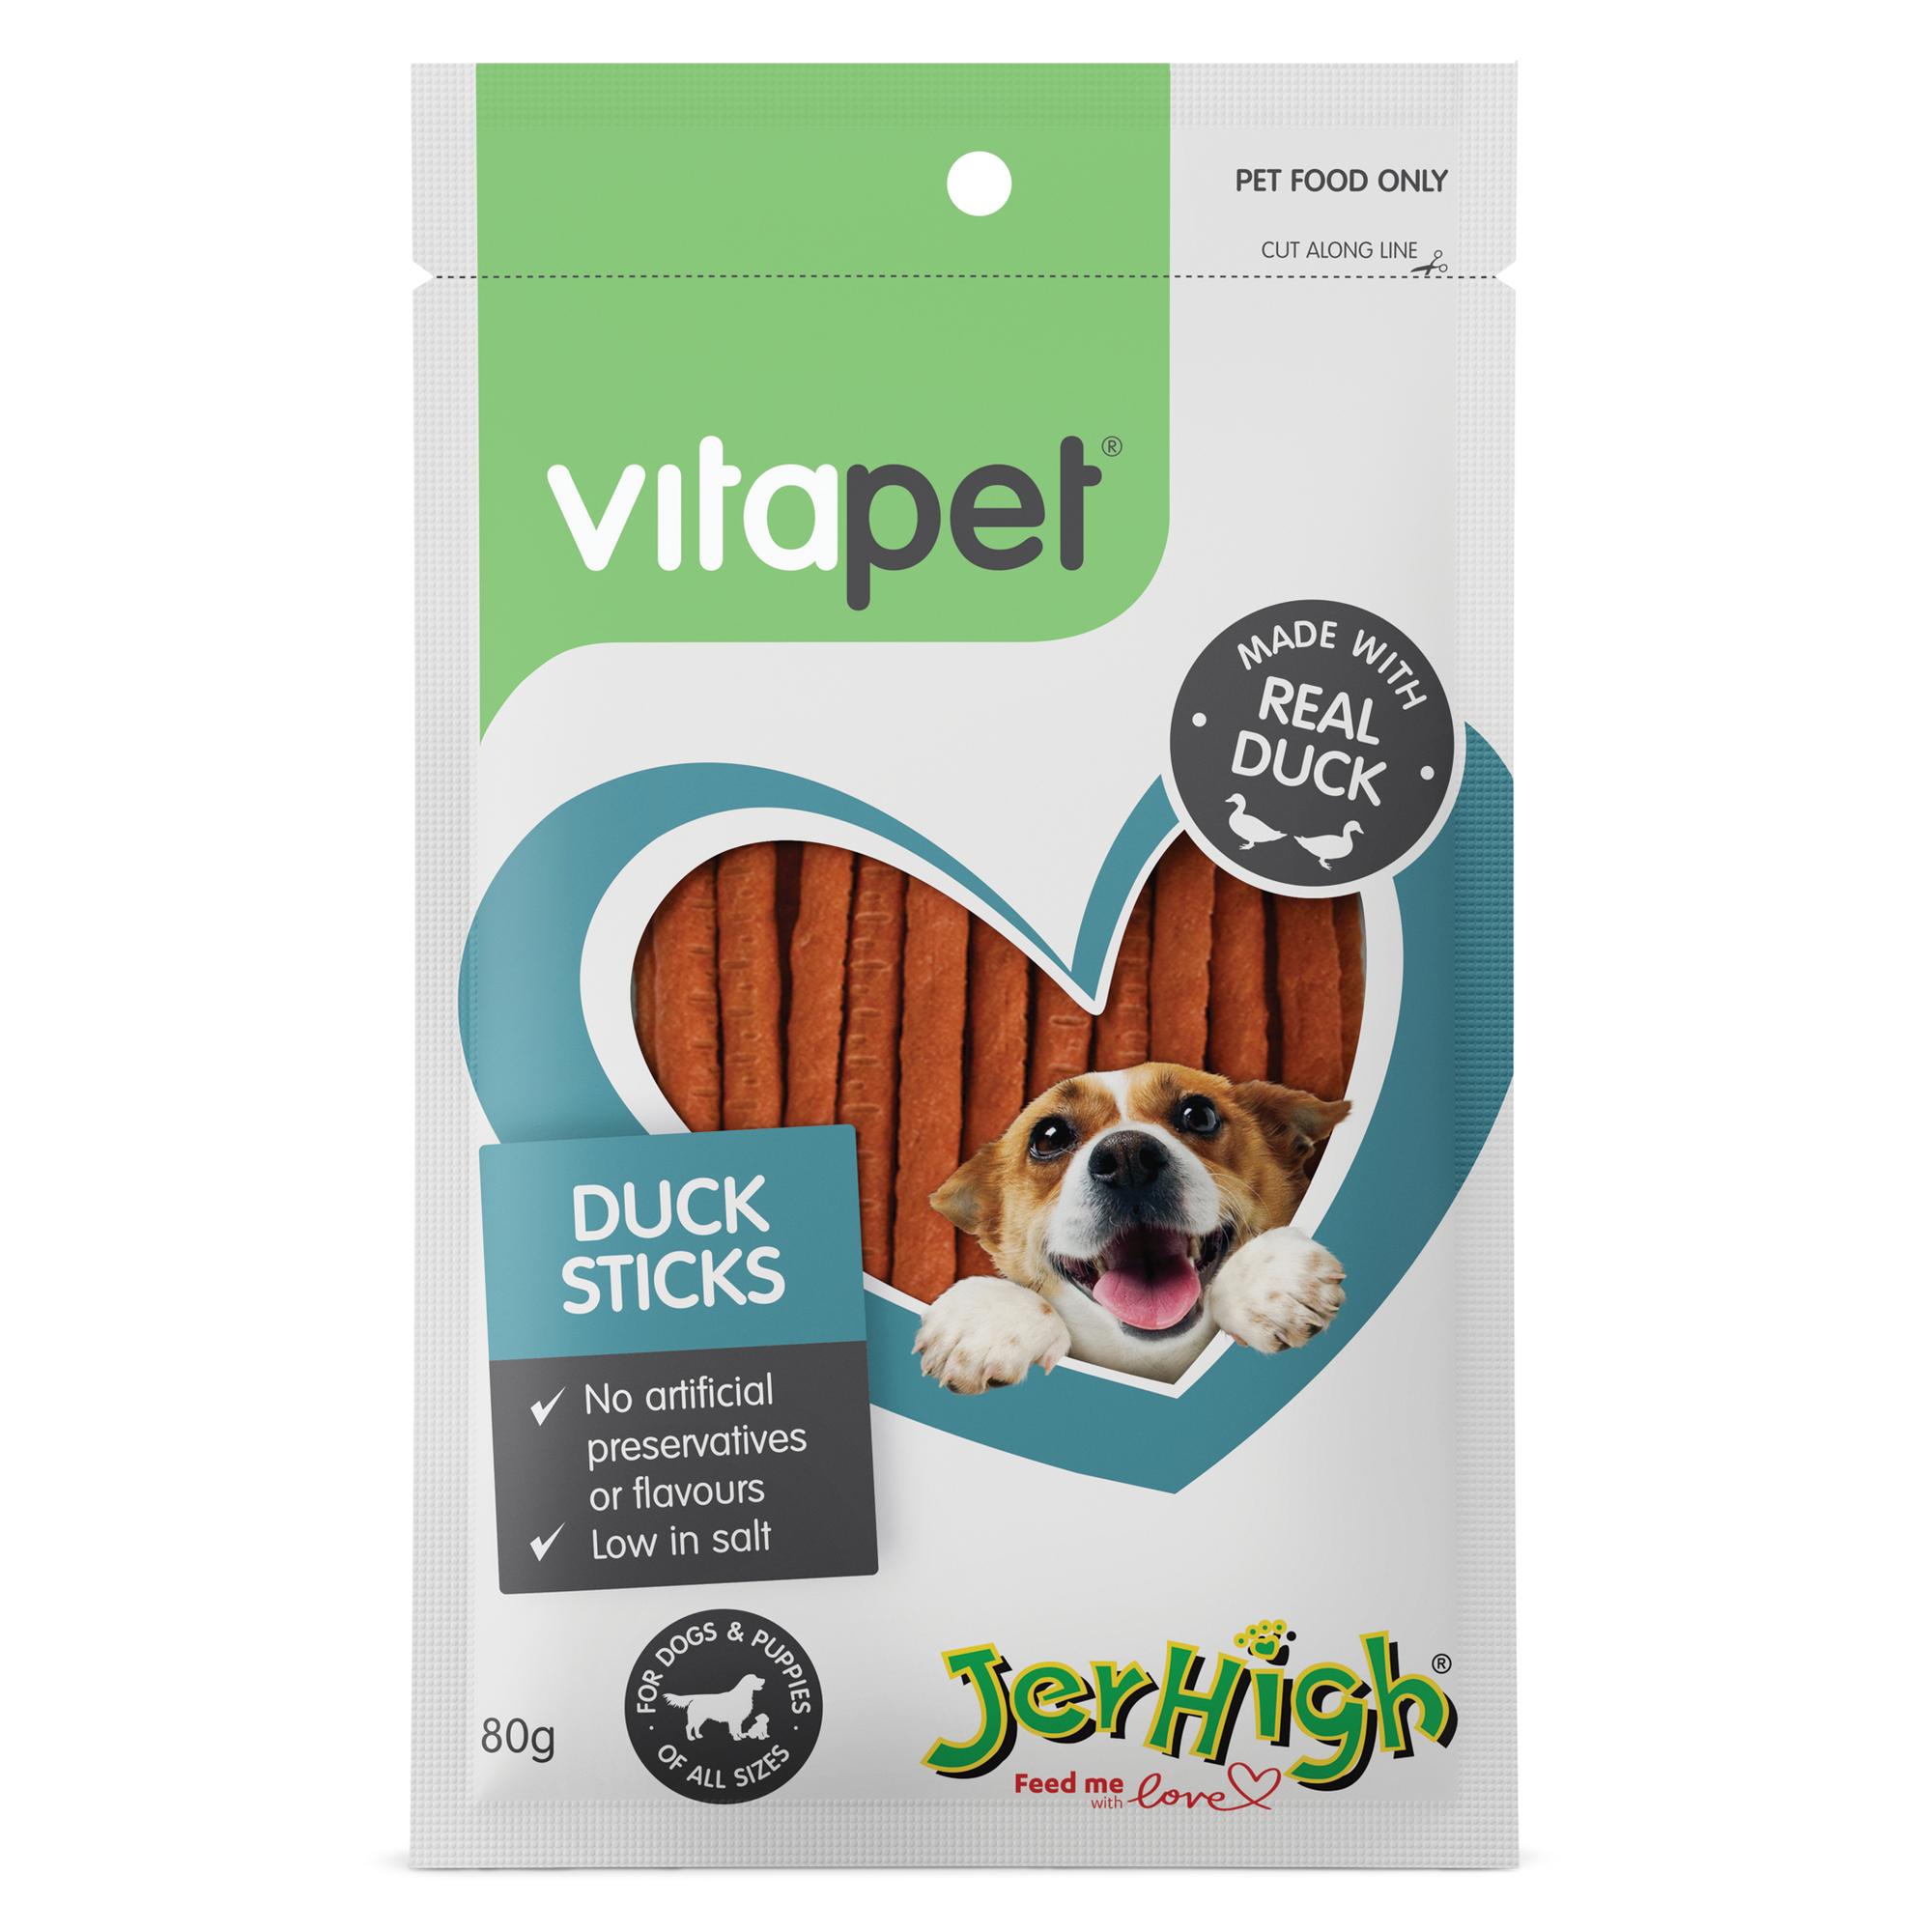 Vitapet Jerhigh Duck Sticks 80g - RSPCA VIC